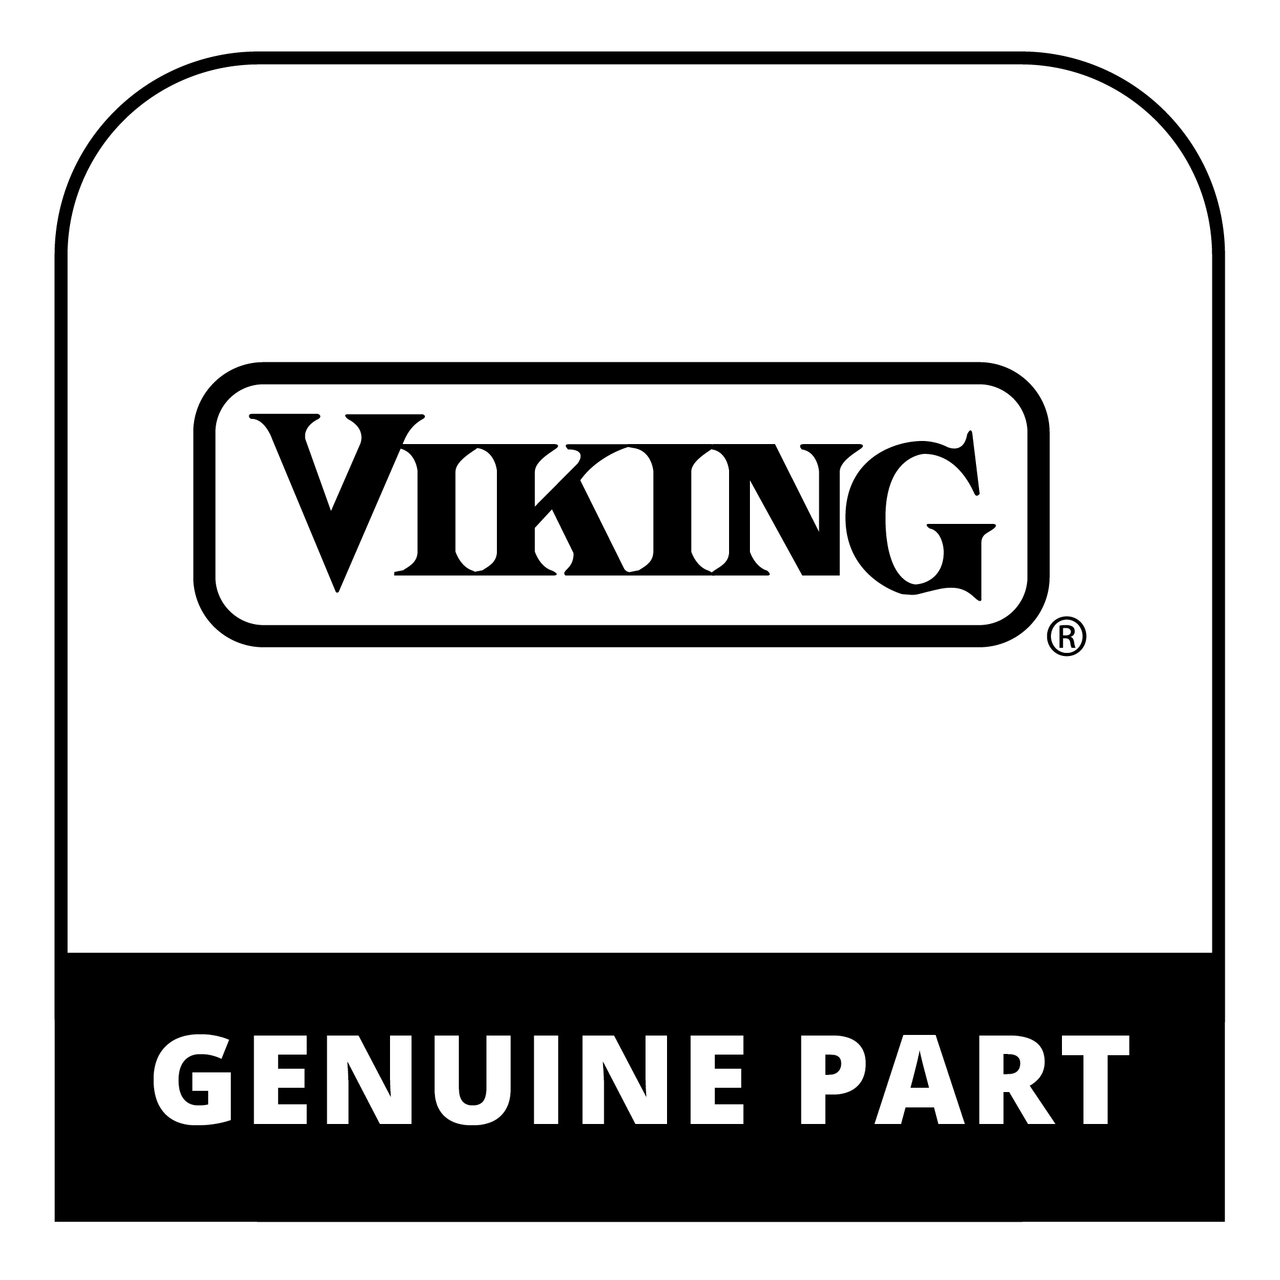 Viking 069591-006 - Brkt, Extnd, Shlf, Hdl Side, Lh, Ar Column 7 Series - Genuine Viking Part